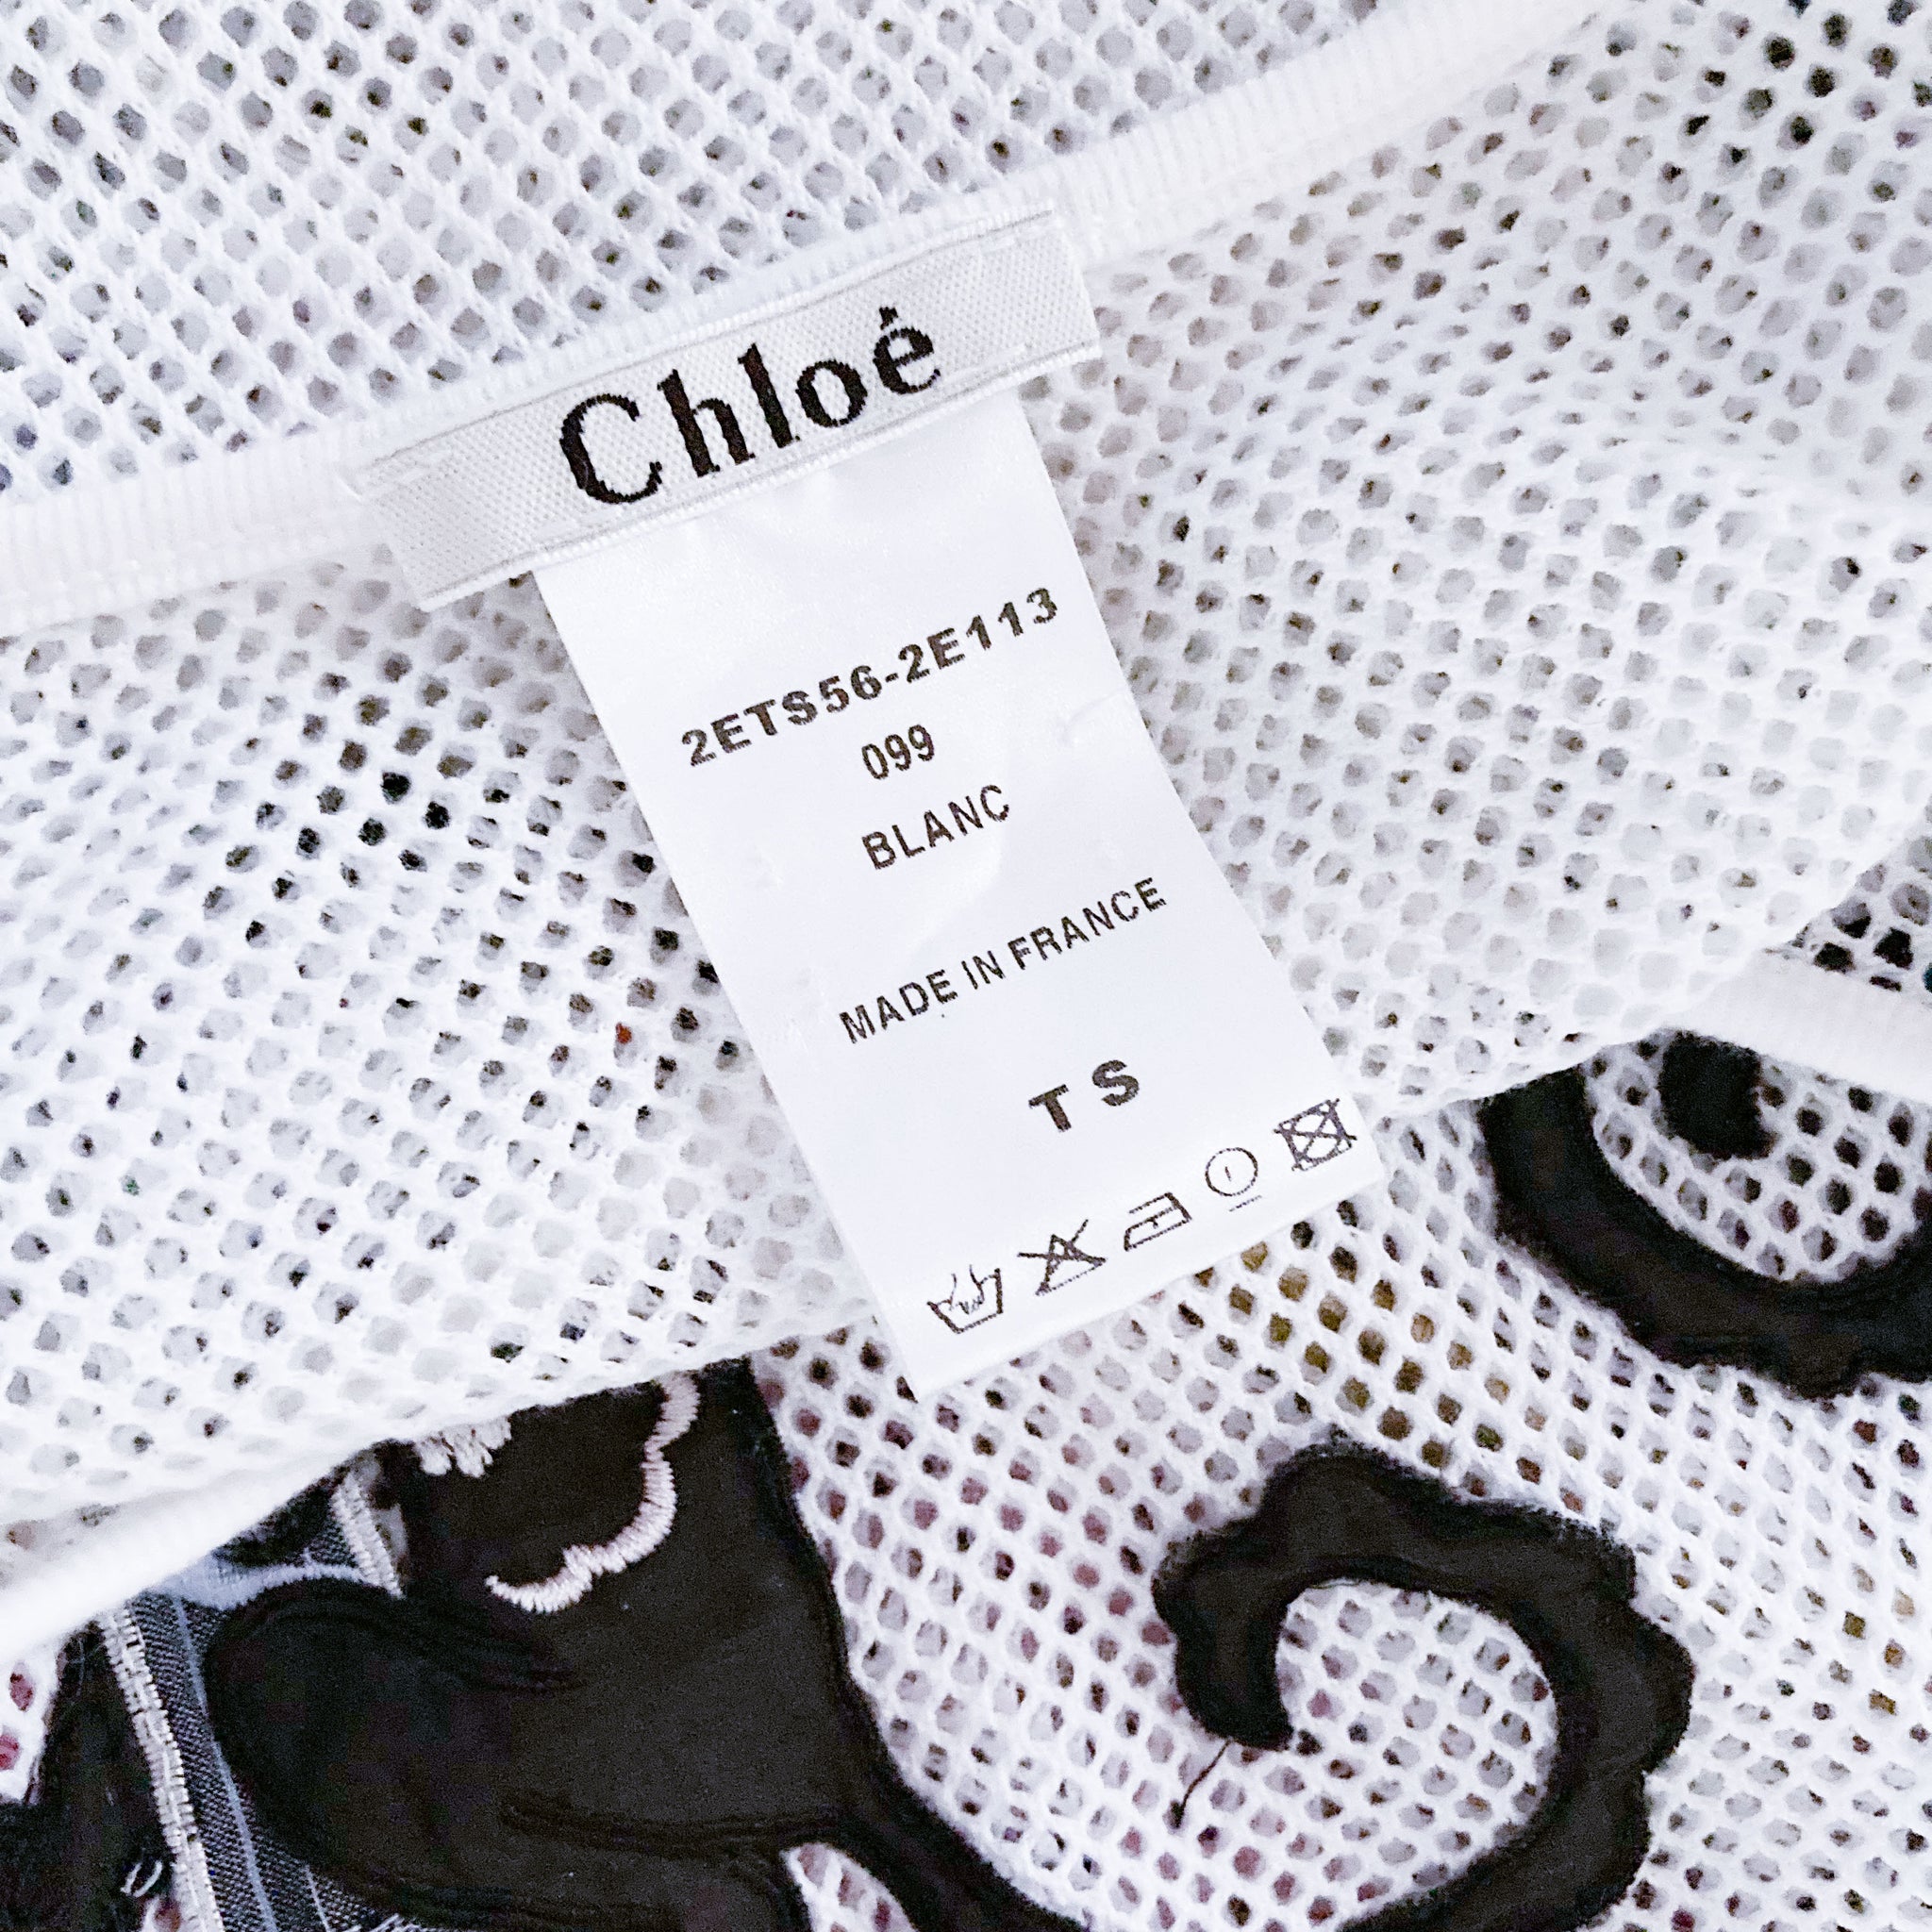 Chloe ( by Phoebe Philo ) S/S 2002 runway shirt